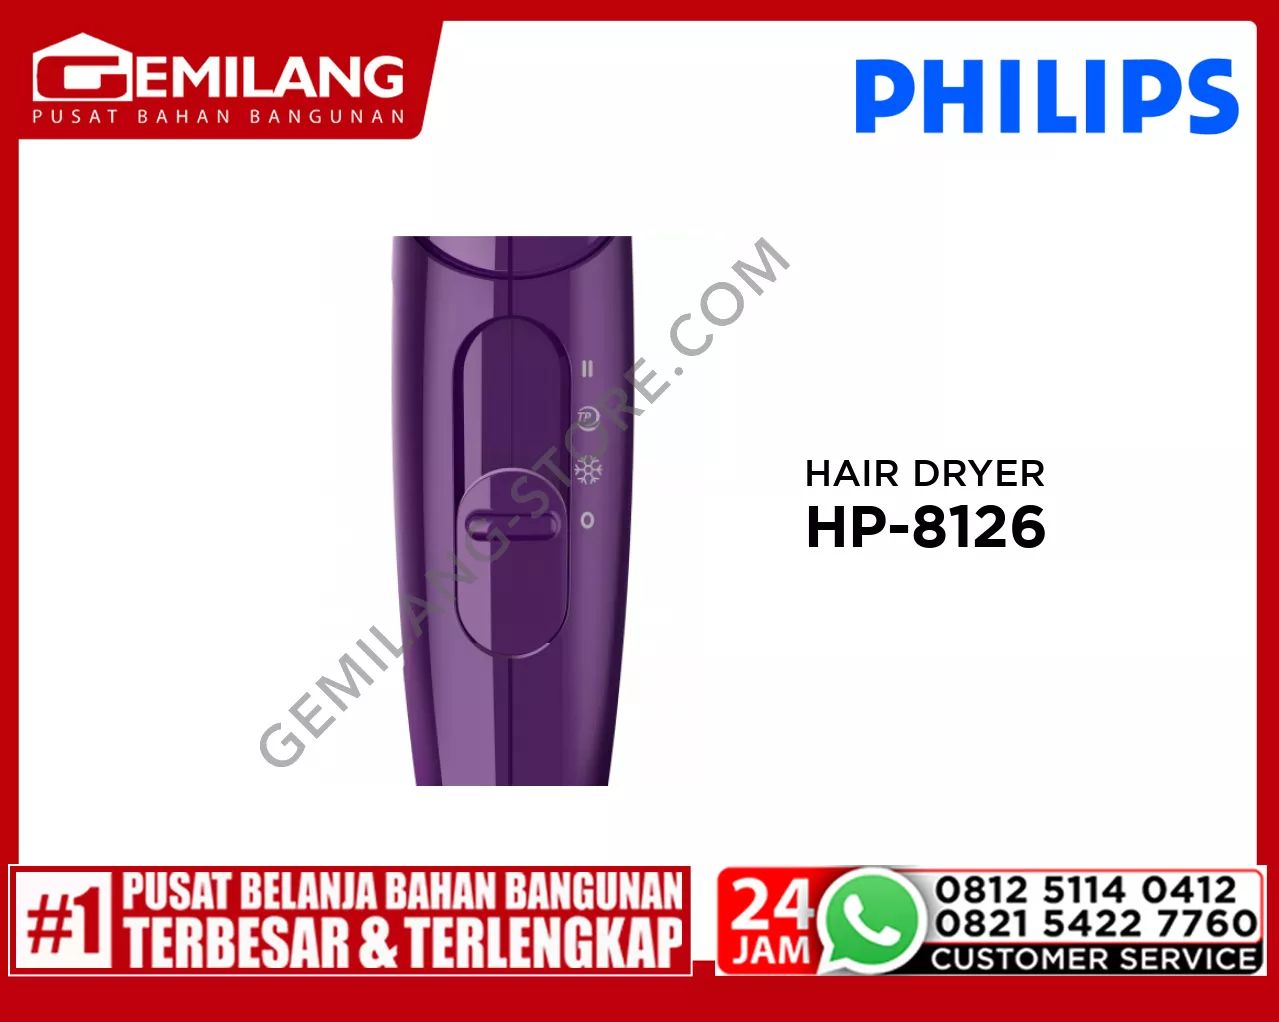 PHILIPS HAIR DRYER HP-8126